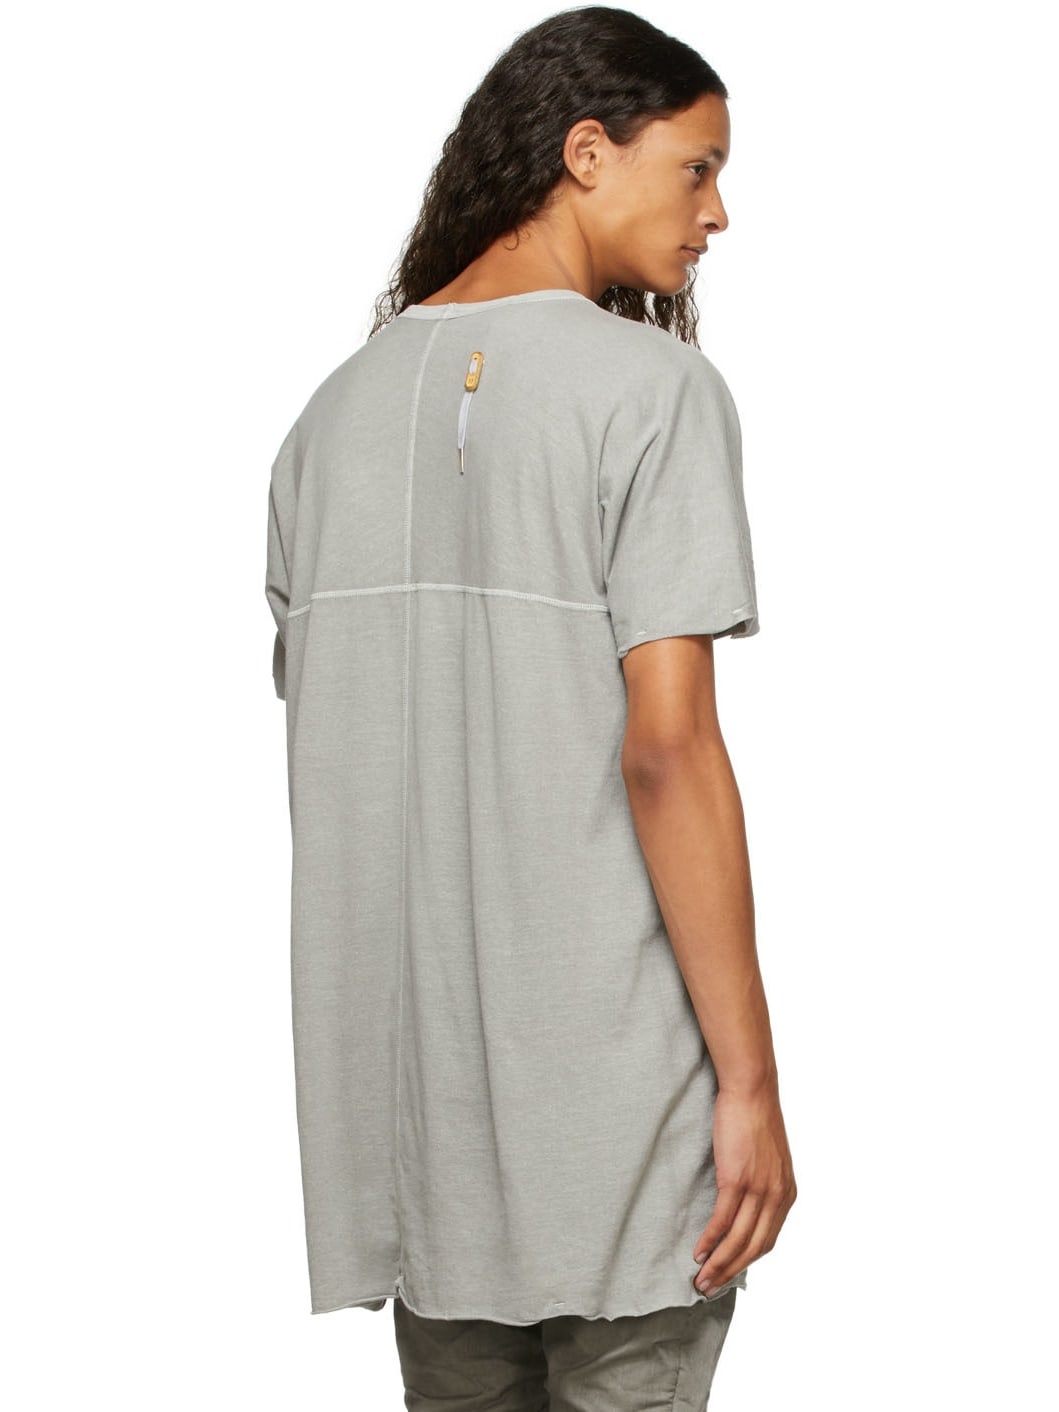 Grey Garment-Dyed One-Piece T-Shirt - 3